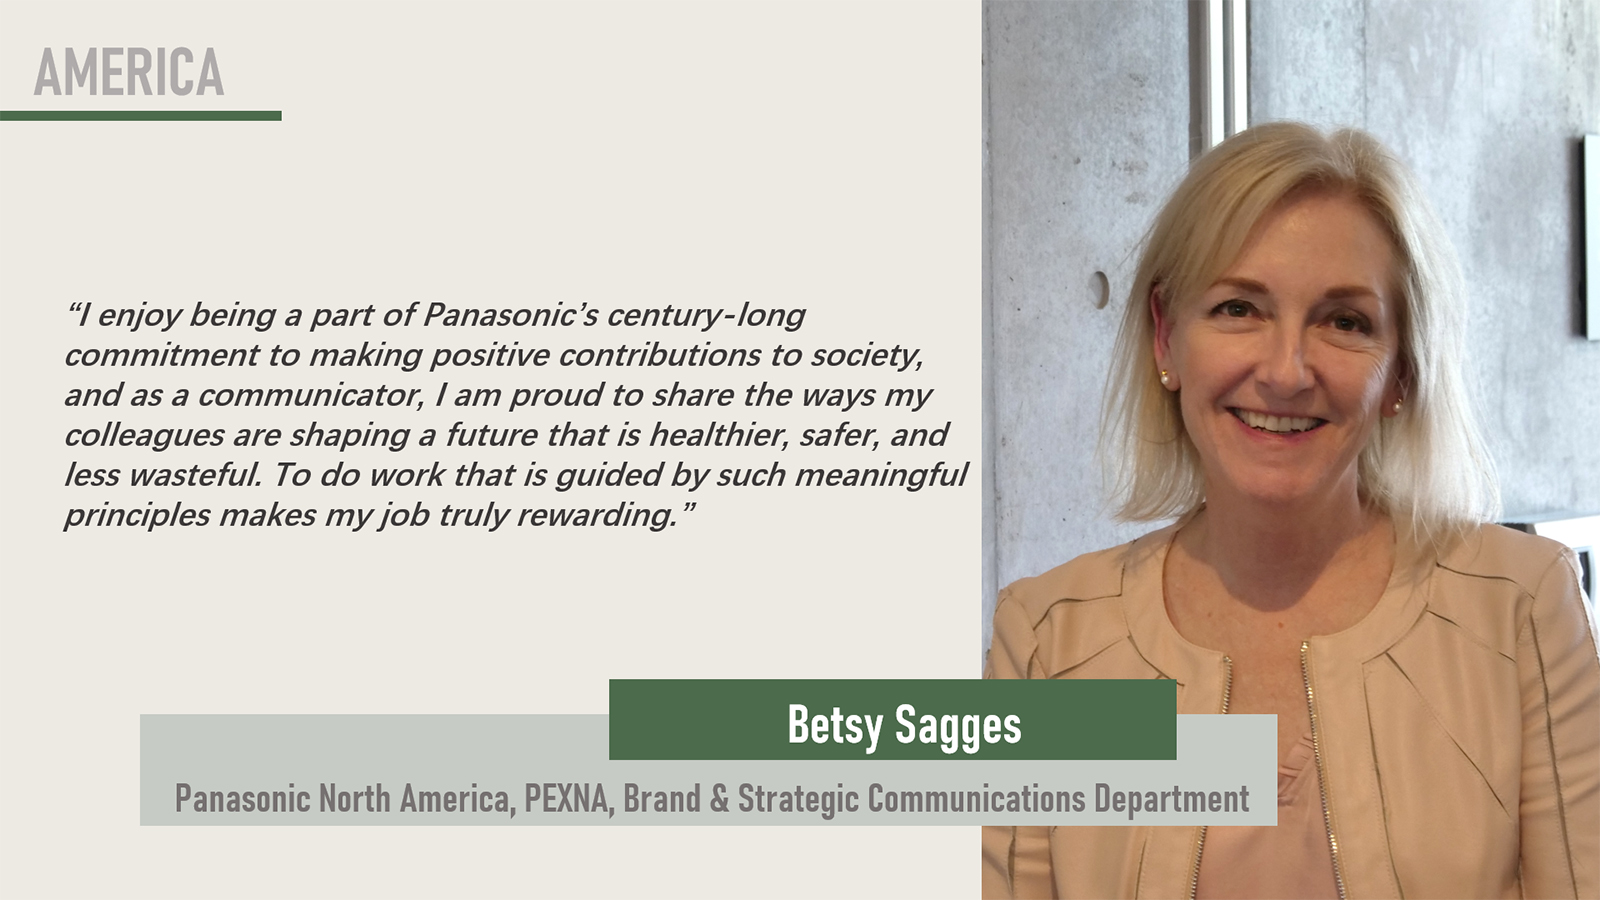 Photo: Betsy Sagges, Panasonic North America, PEXNA, Brand & Strategic Communications Department